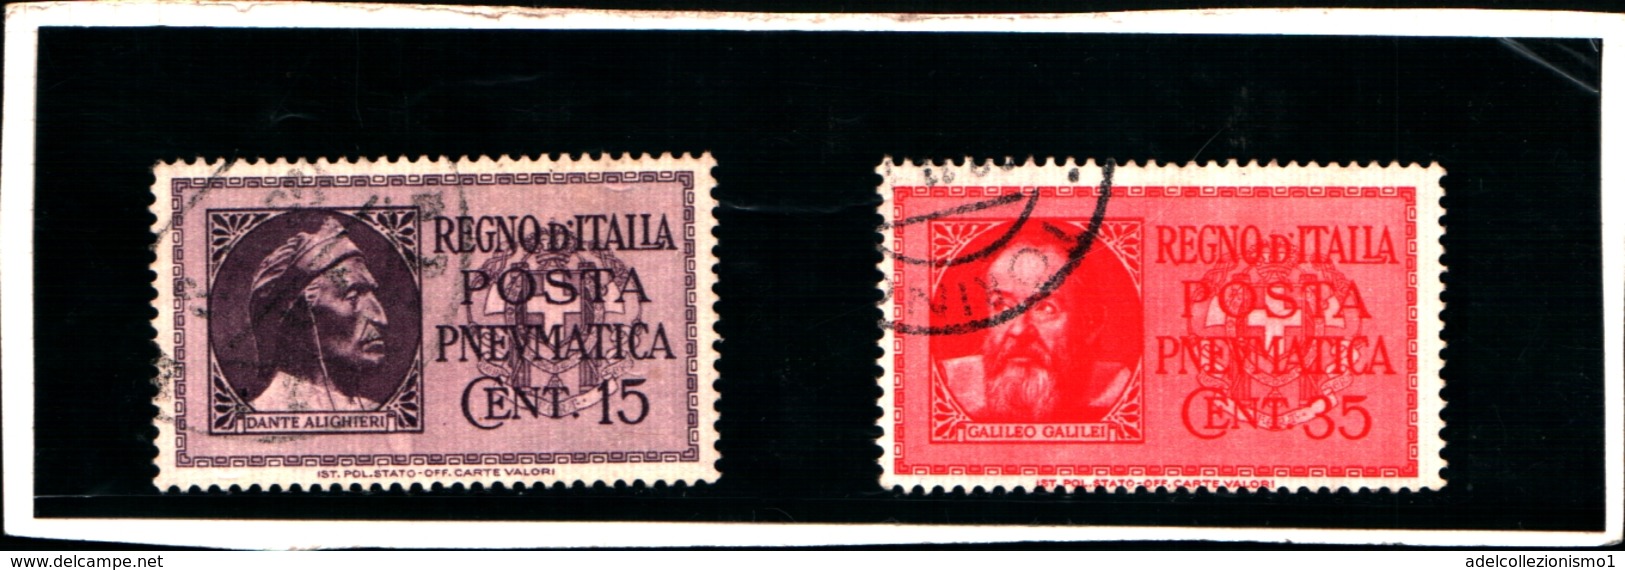 91063) ITALIA-Effigie Di Dante Alighieri E Galileo Galilei - POSTA PNEUMATICA - 29 Marzo 1933-USATI - Pneumatic Mail